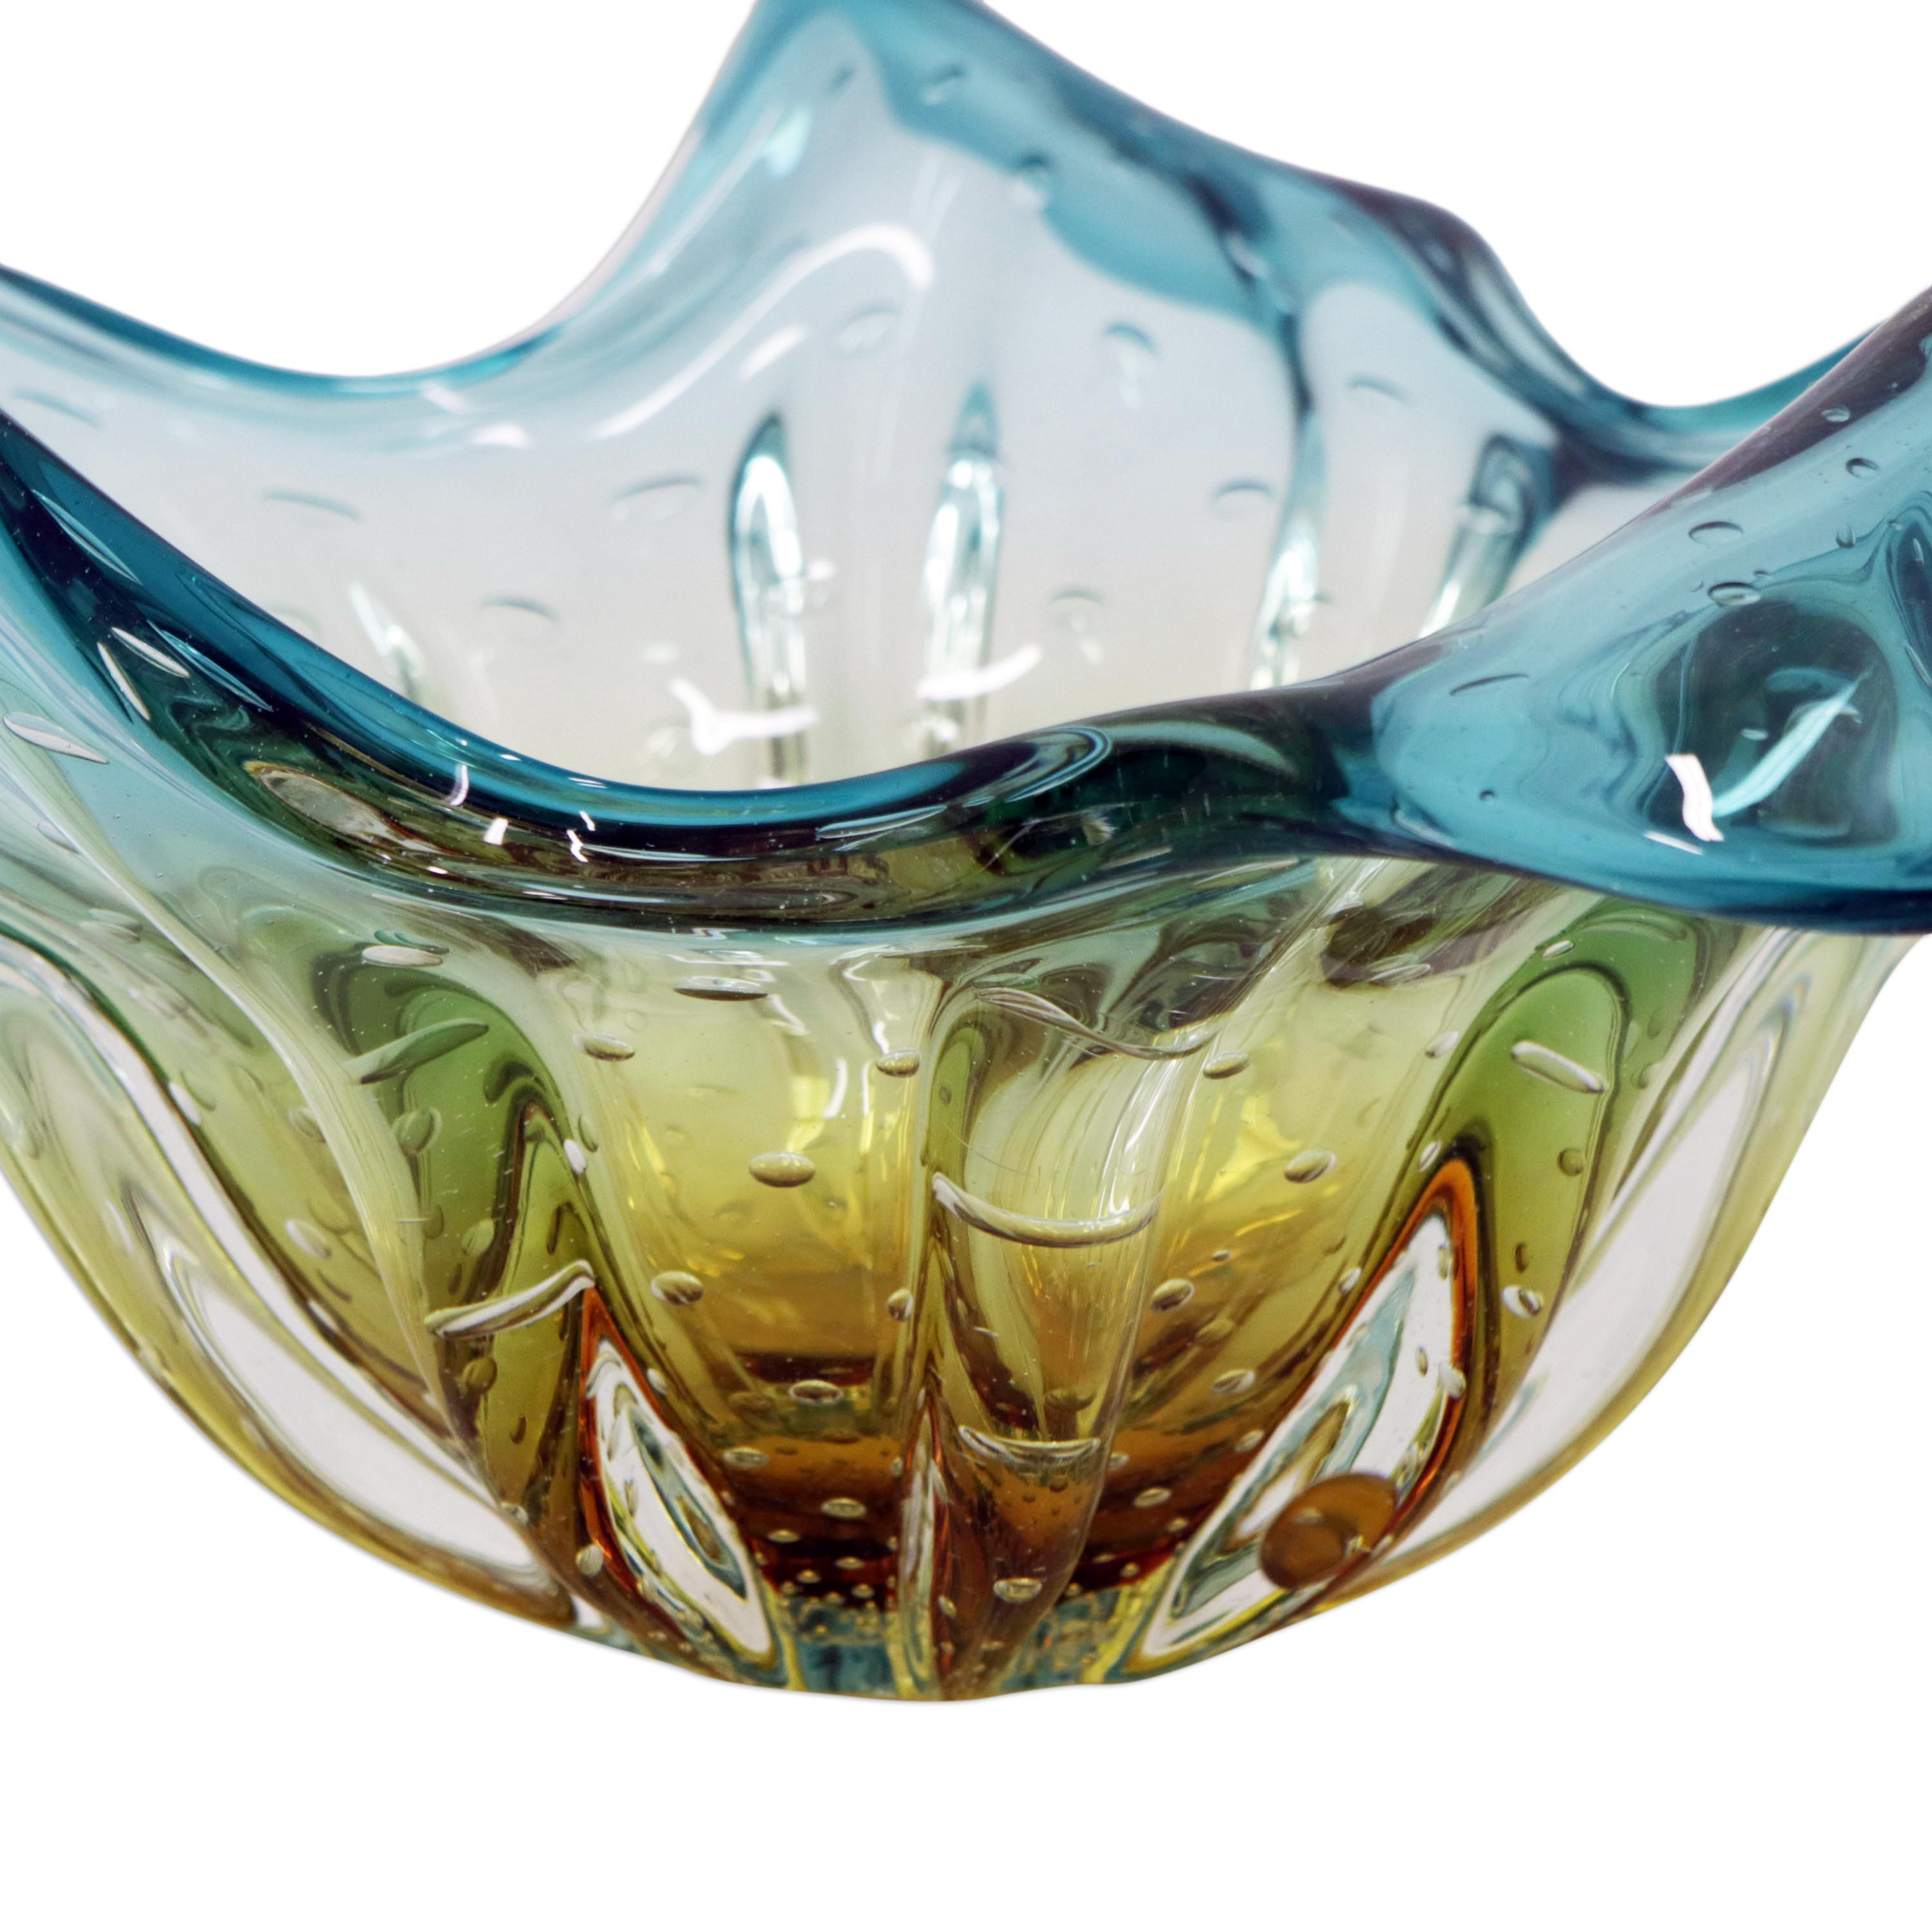 Murano-Style Art Glass Centerpiece - Splash | NOVICA